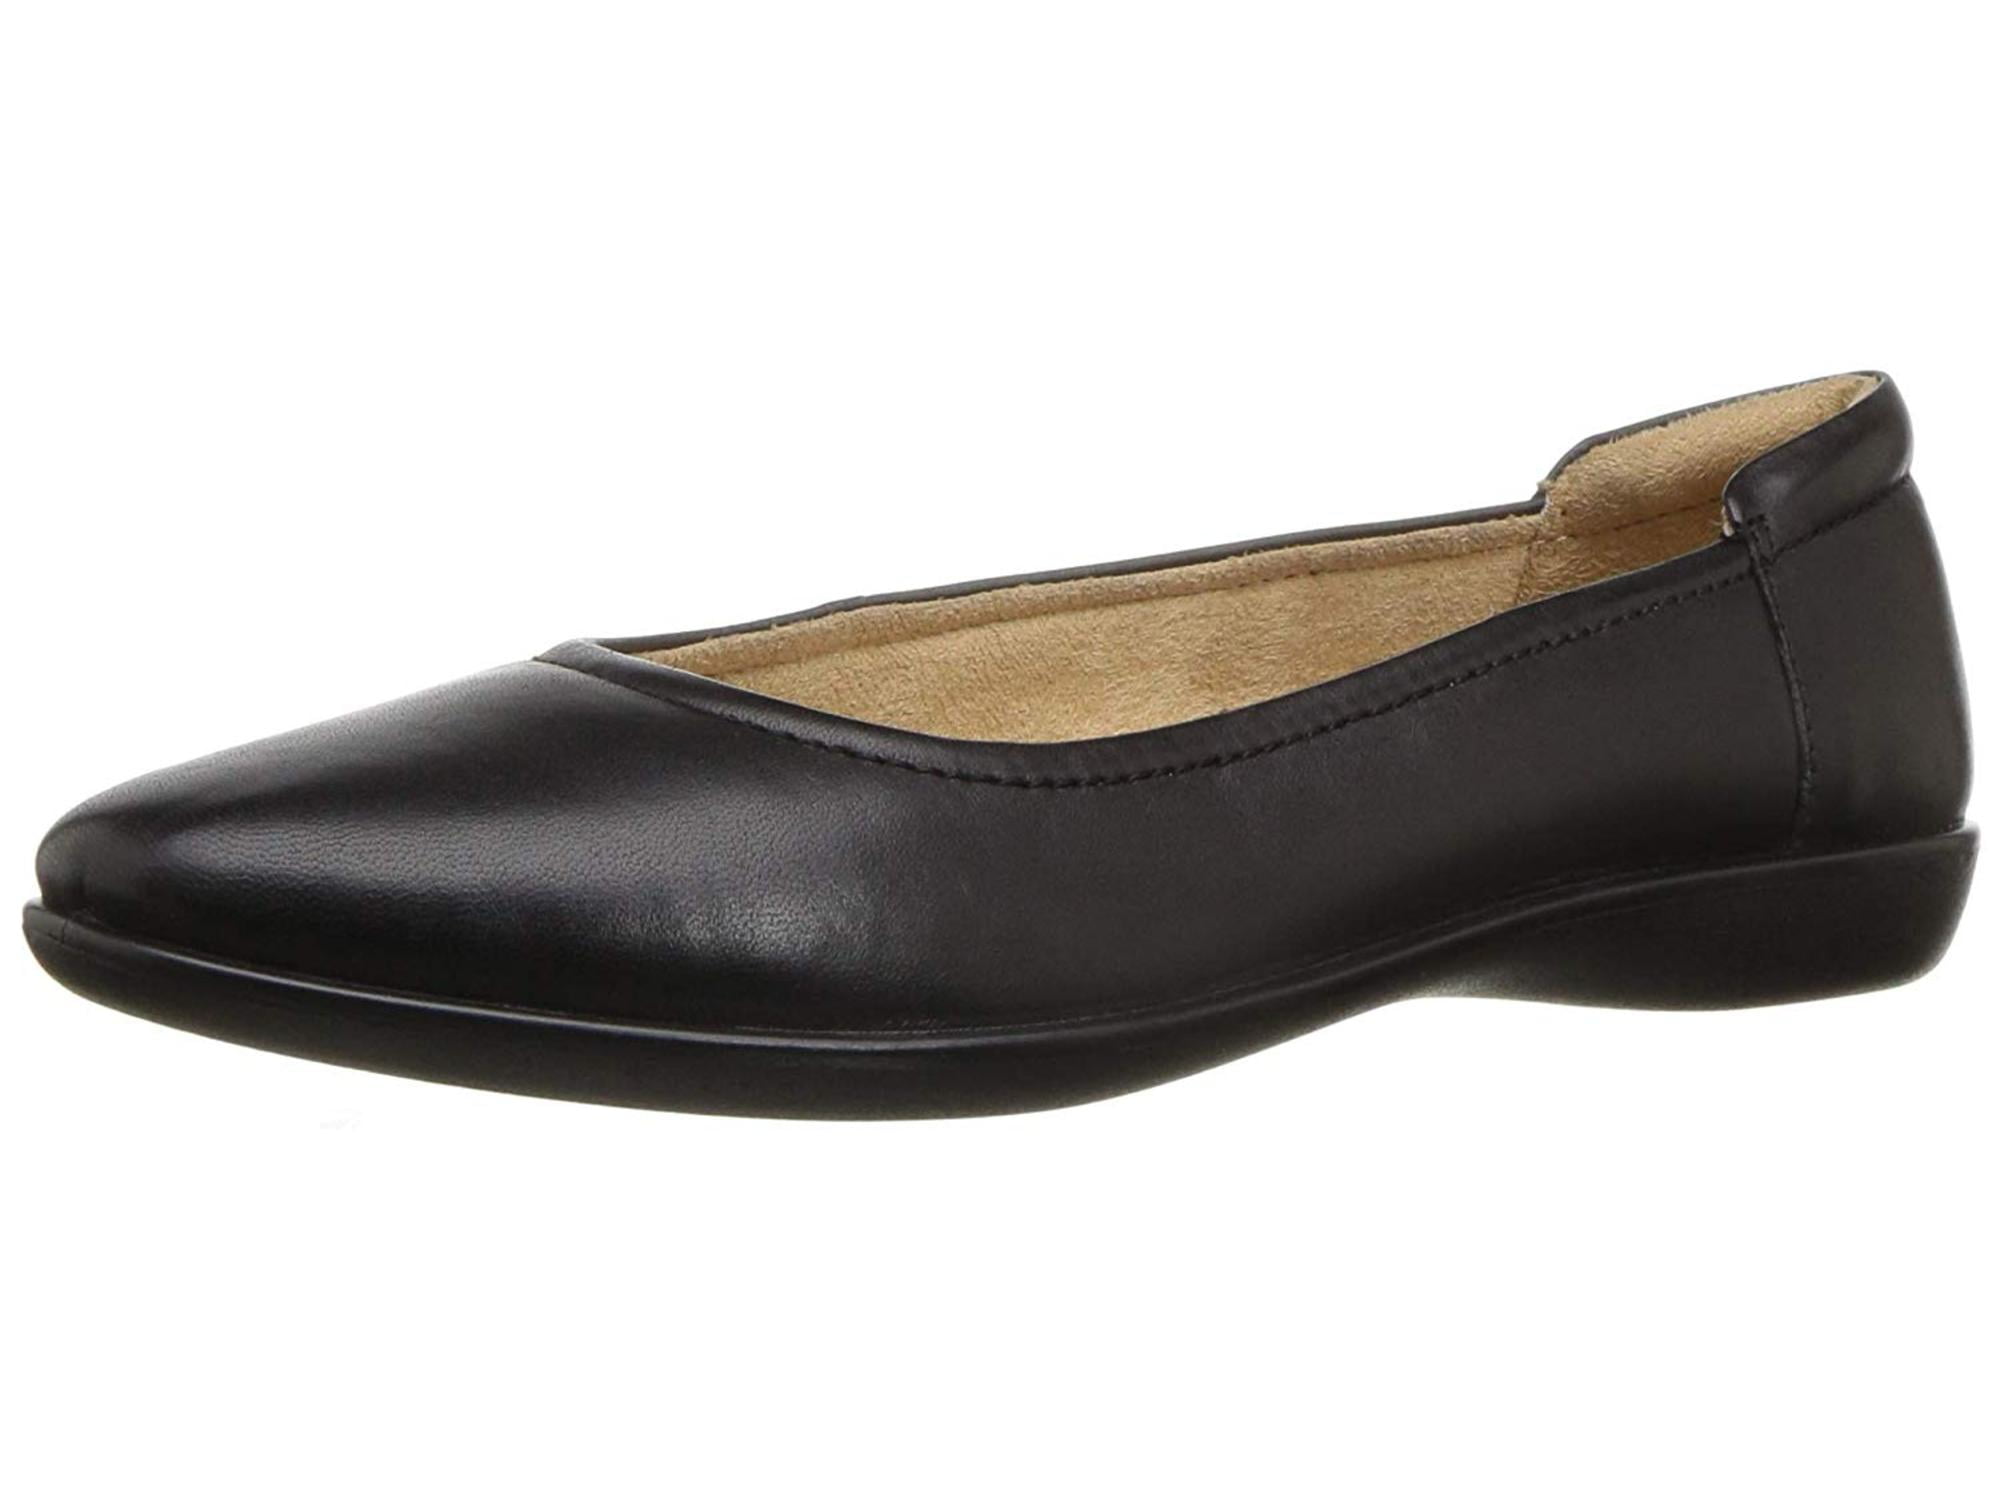 Naturalizer Flexy Slip-On Flats Women's Shoes Black Size 7.5 W ...